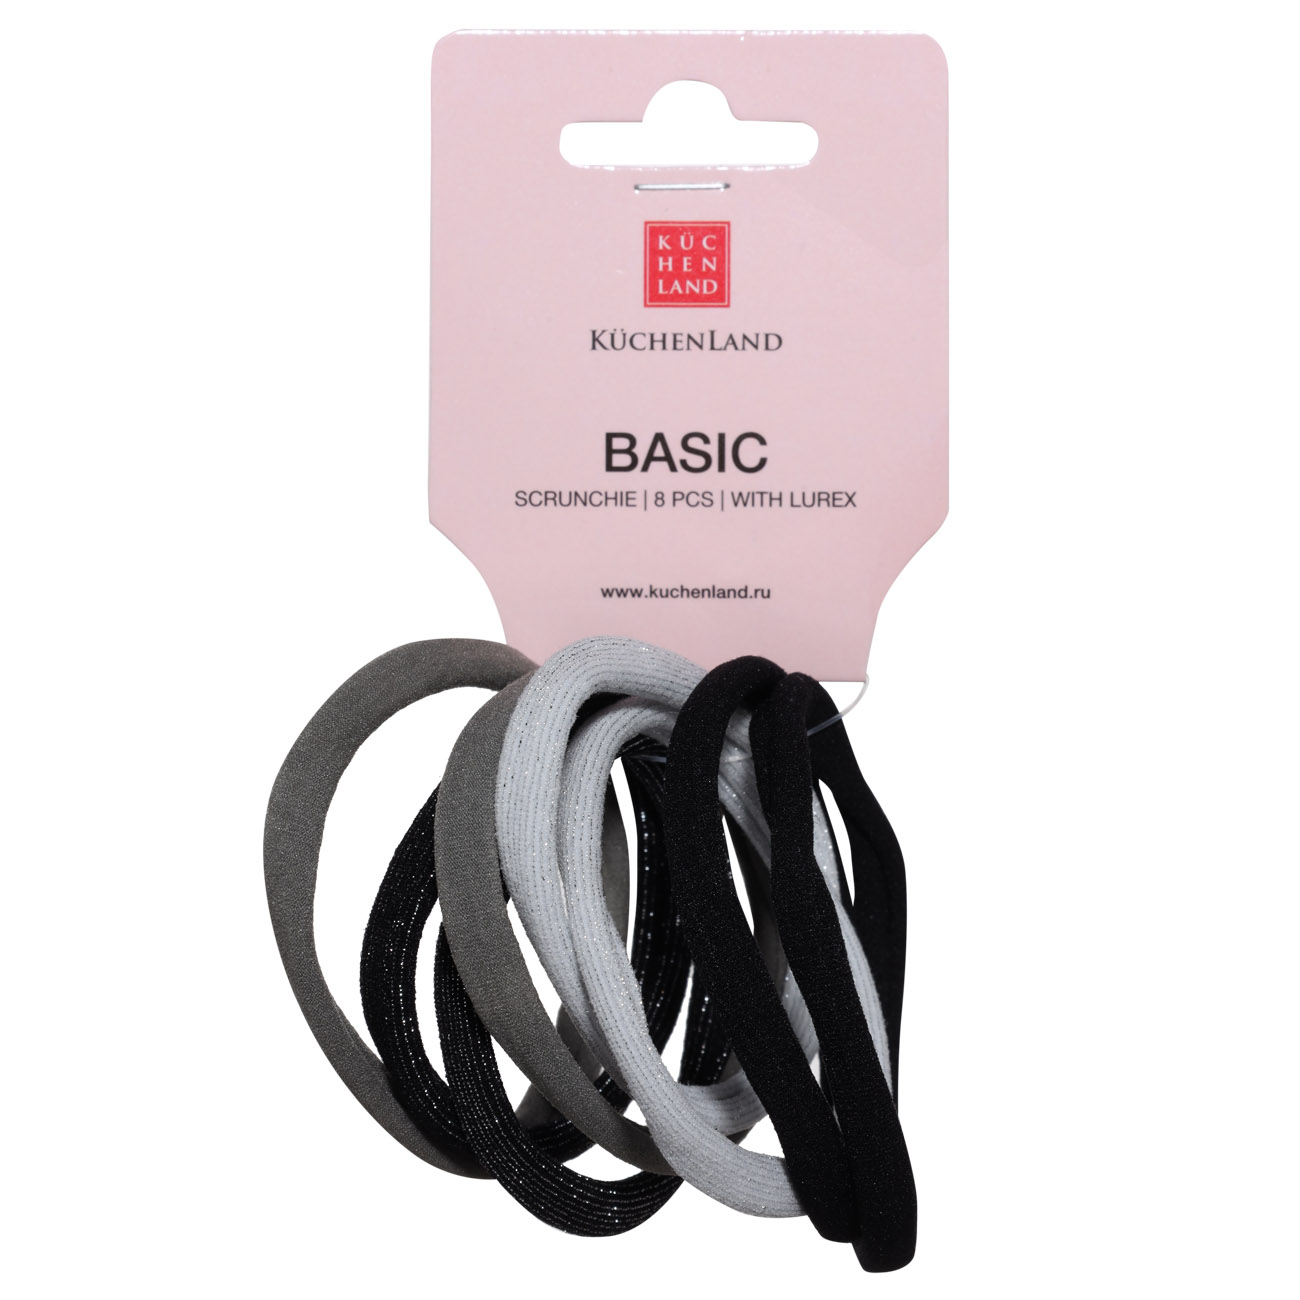 Elastic band for hair, 5 cm, 8 pcs, polyester, gray / white / black, with lurex, Basic изображение № 2